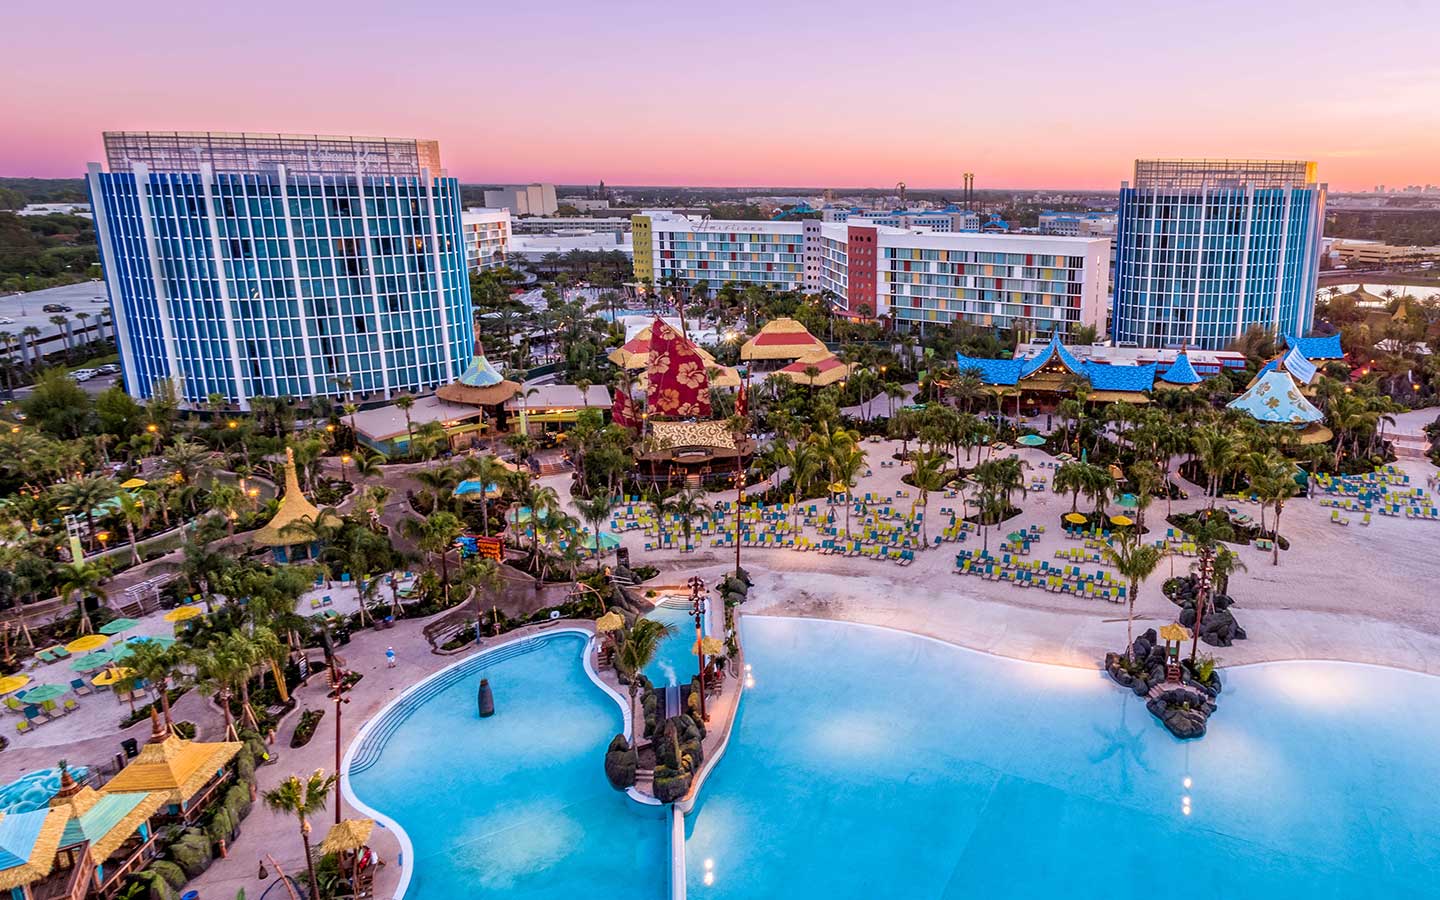 Save Up to 30% Off at Universal Orlando Resort